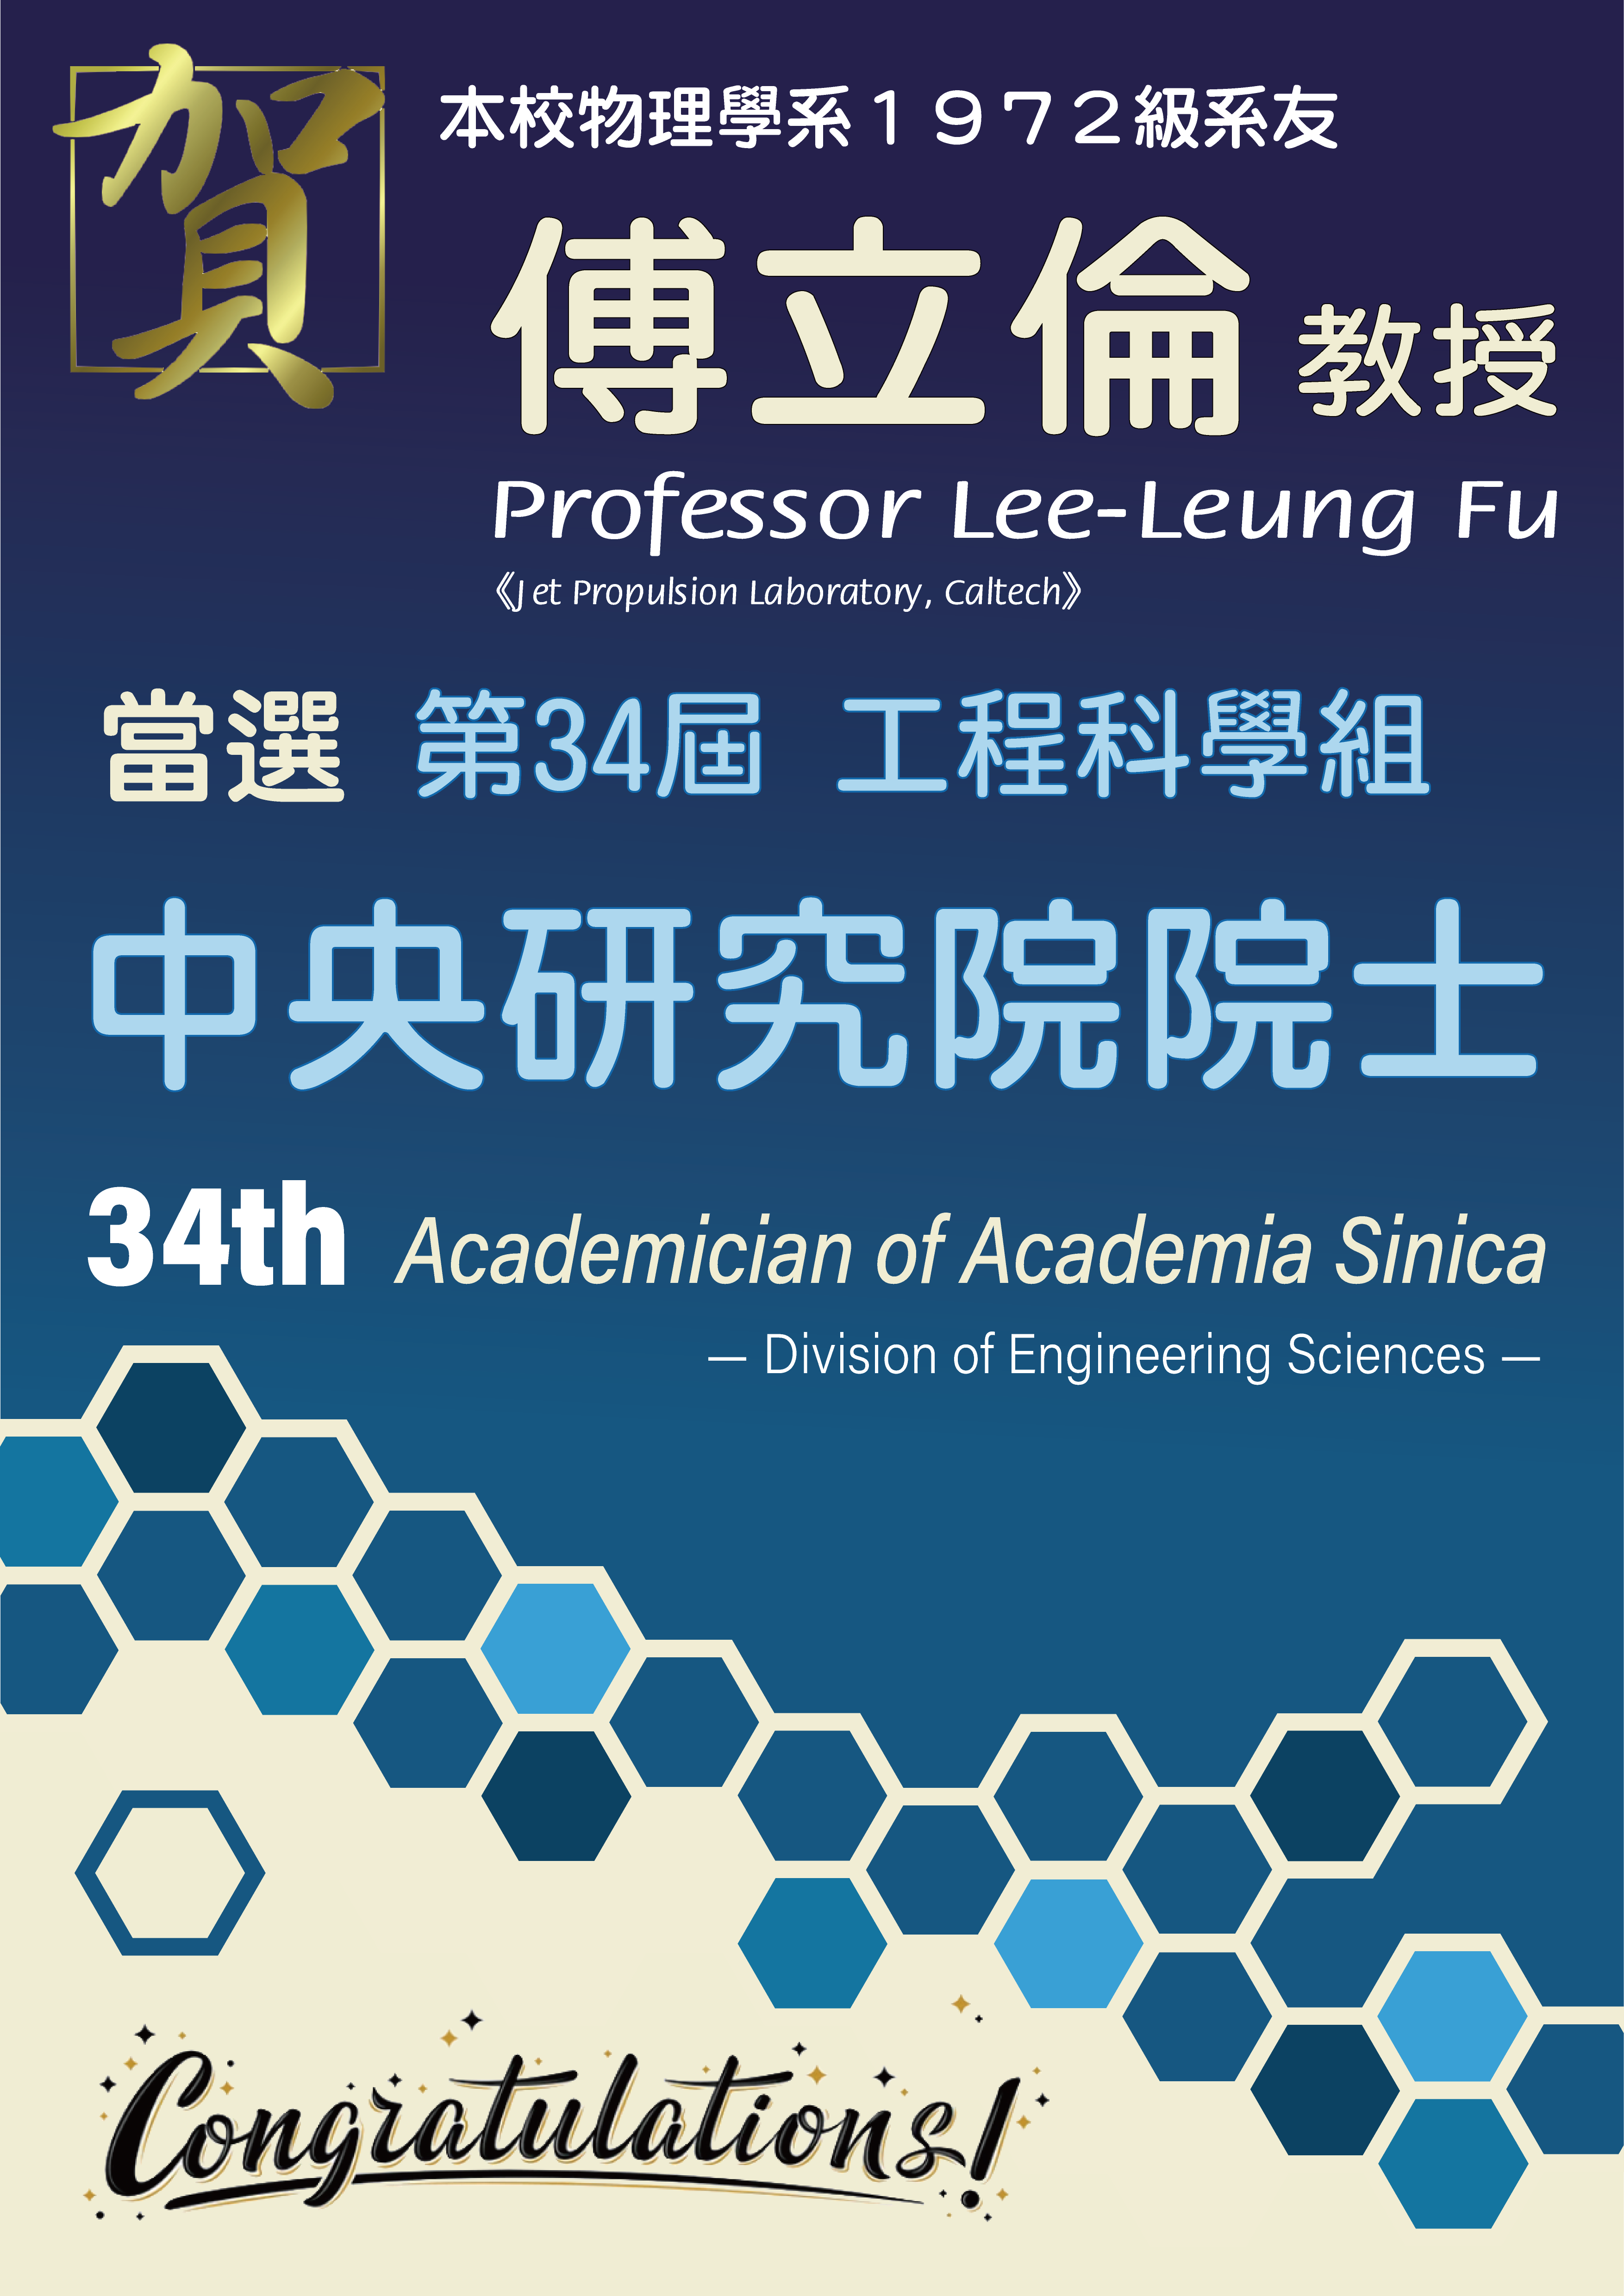 《賀》物理學系1972級系友 傅立倫 教授 Prof. Lee-Leung Fu 當選 第34屆 工程科學組 《中央研究院院士》 (34th Academician of Academia Sinica - Division of Engineering Sciences)